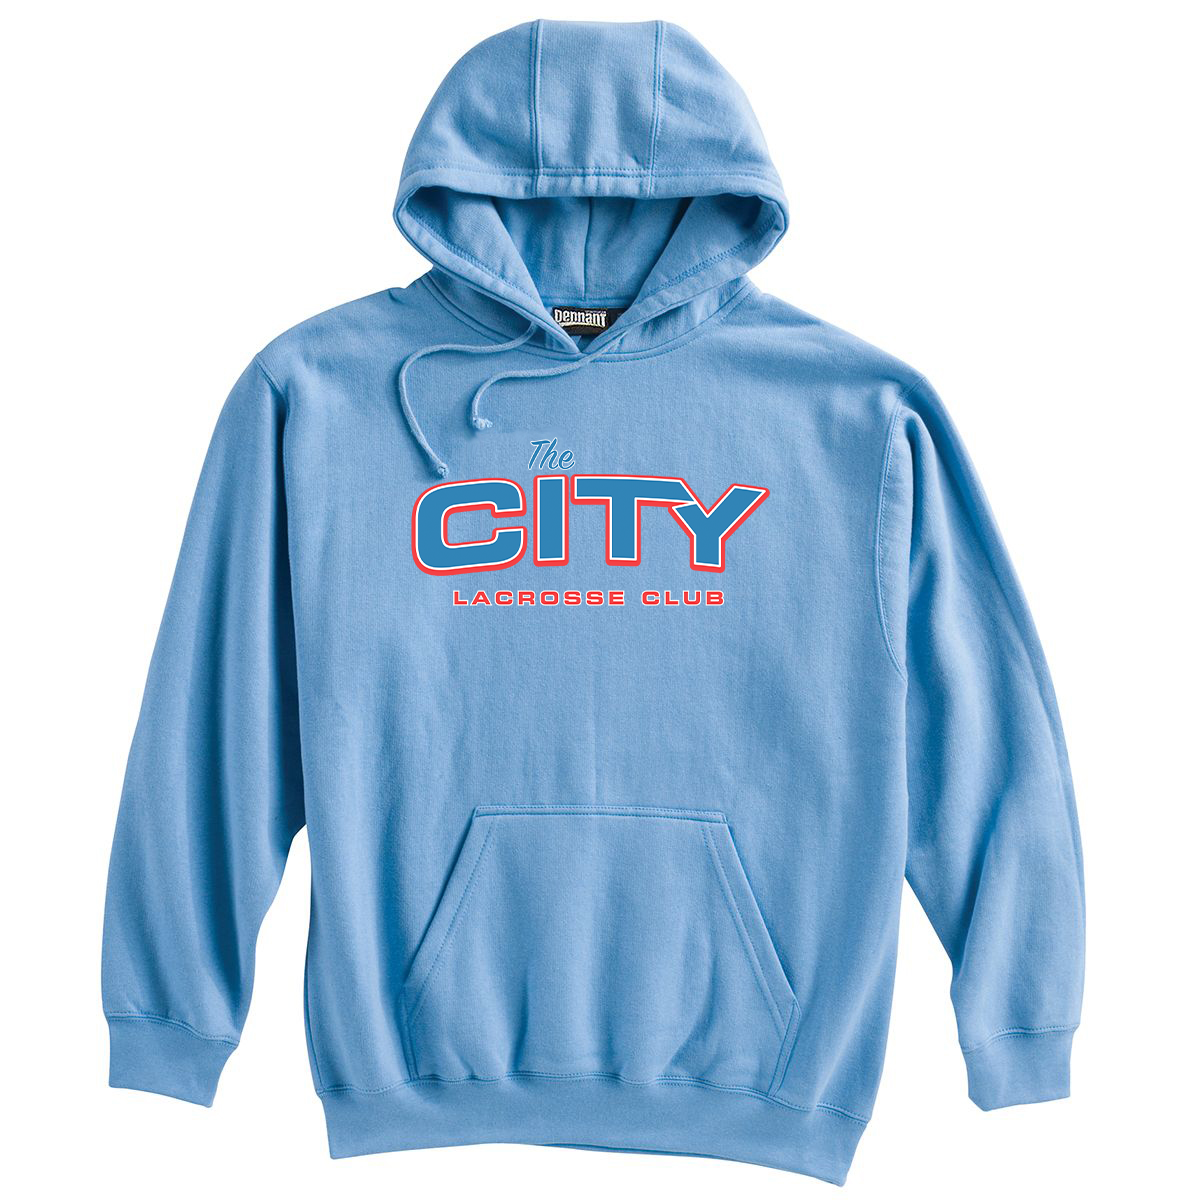 The City Lacrosse Club Sweatshirt